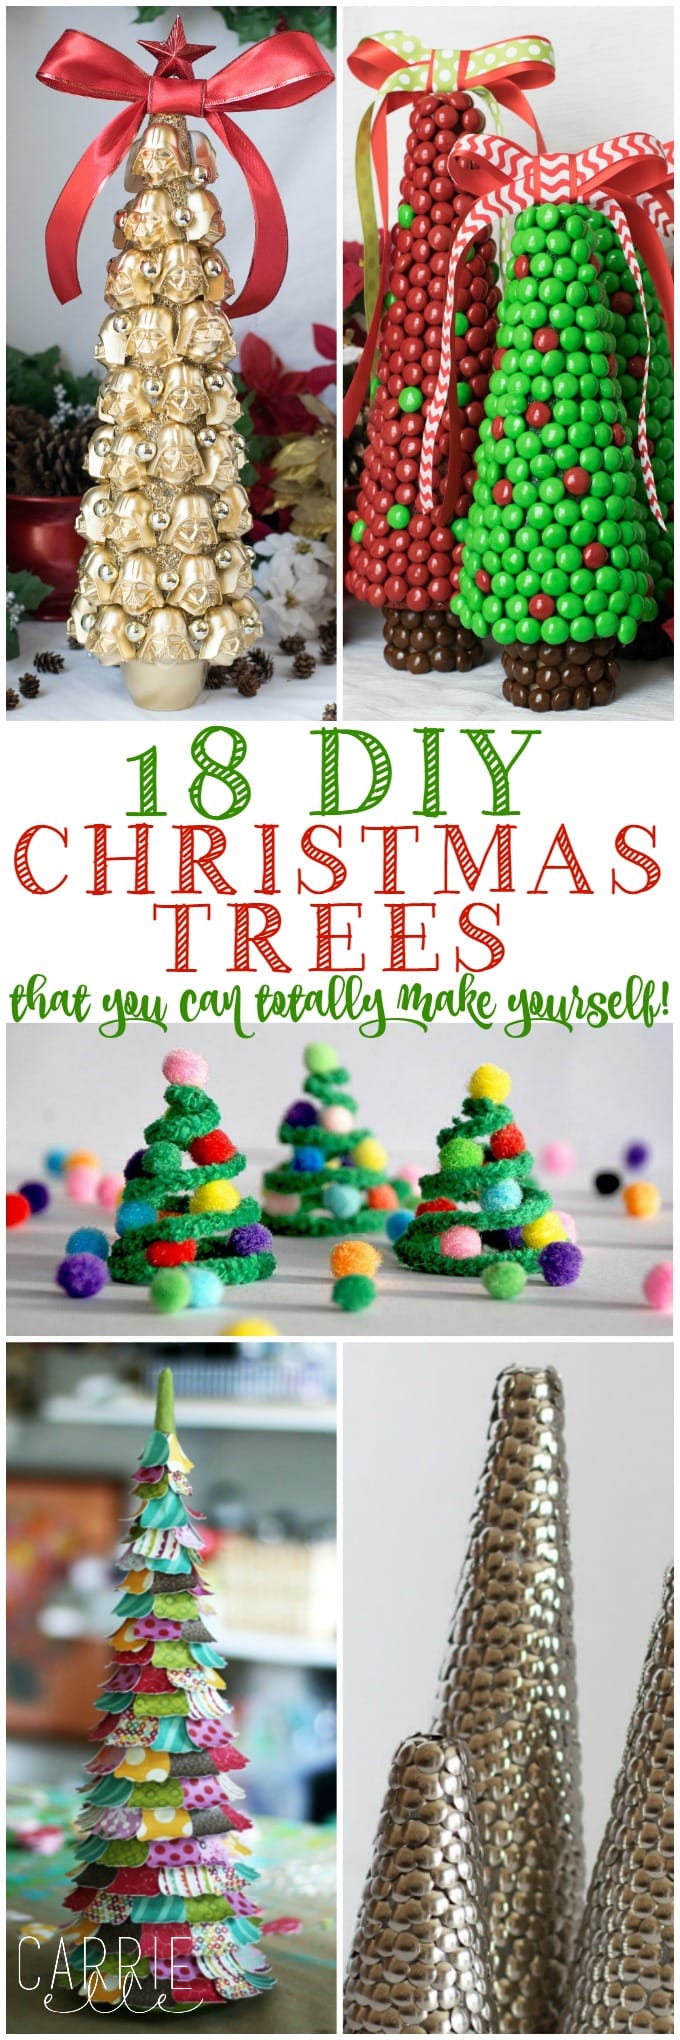 DIY Christmas Tree Crafts